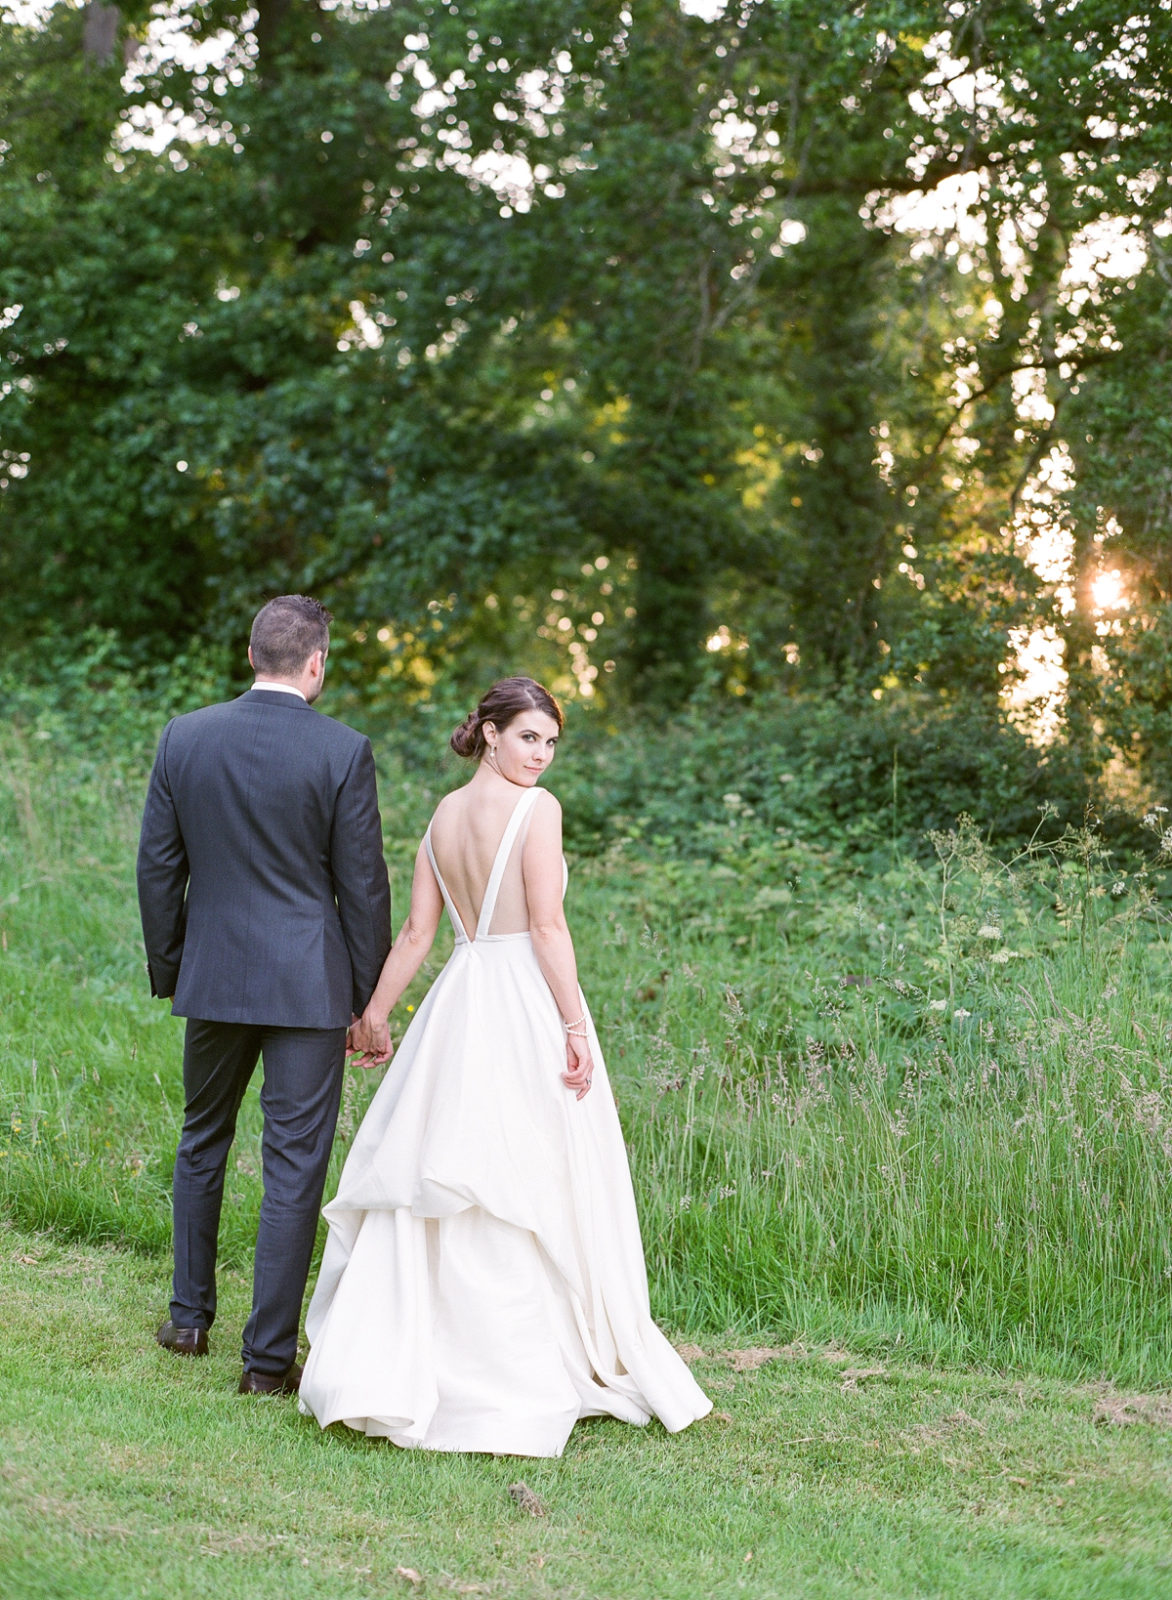 Mount Juliet Estate Wedding Photographer | Ireland Destination Wedding | Molly Carr Photography | Europe Film Photographer | Waterlily Weddings | Bride and Groom